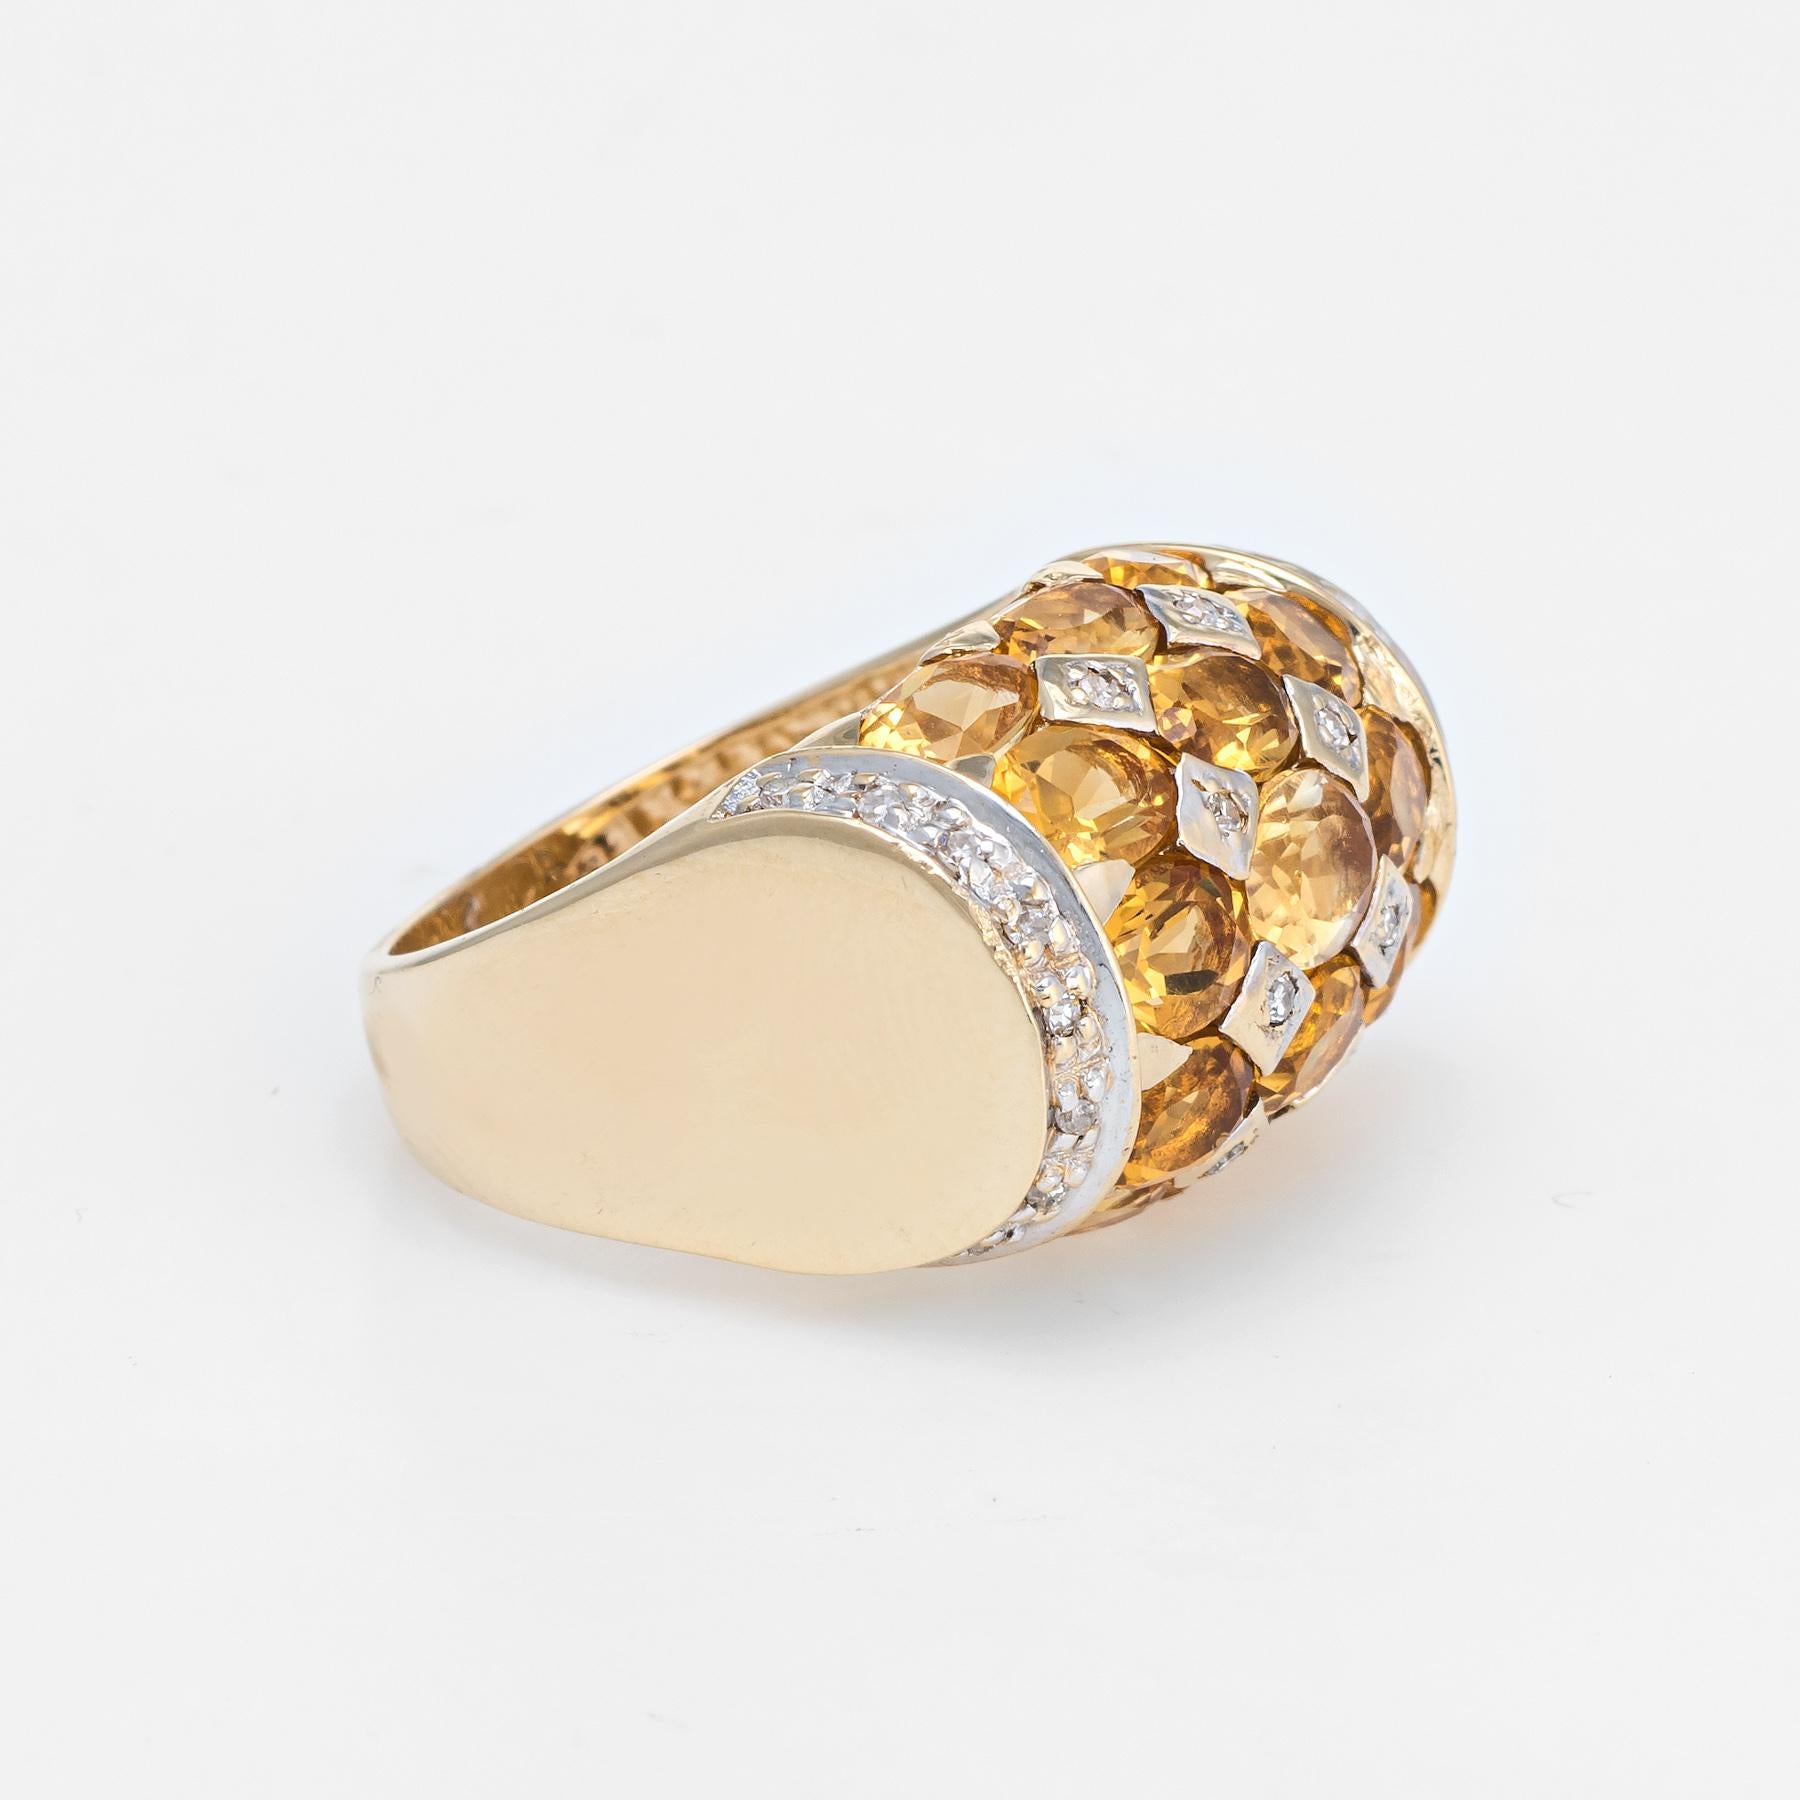 Modern Golden Topaz Diamond Dome Ring Vintage 14 Karat Yellow Gold Estate Jewelry